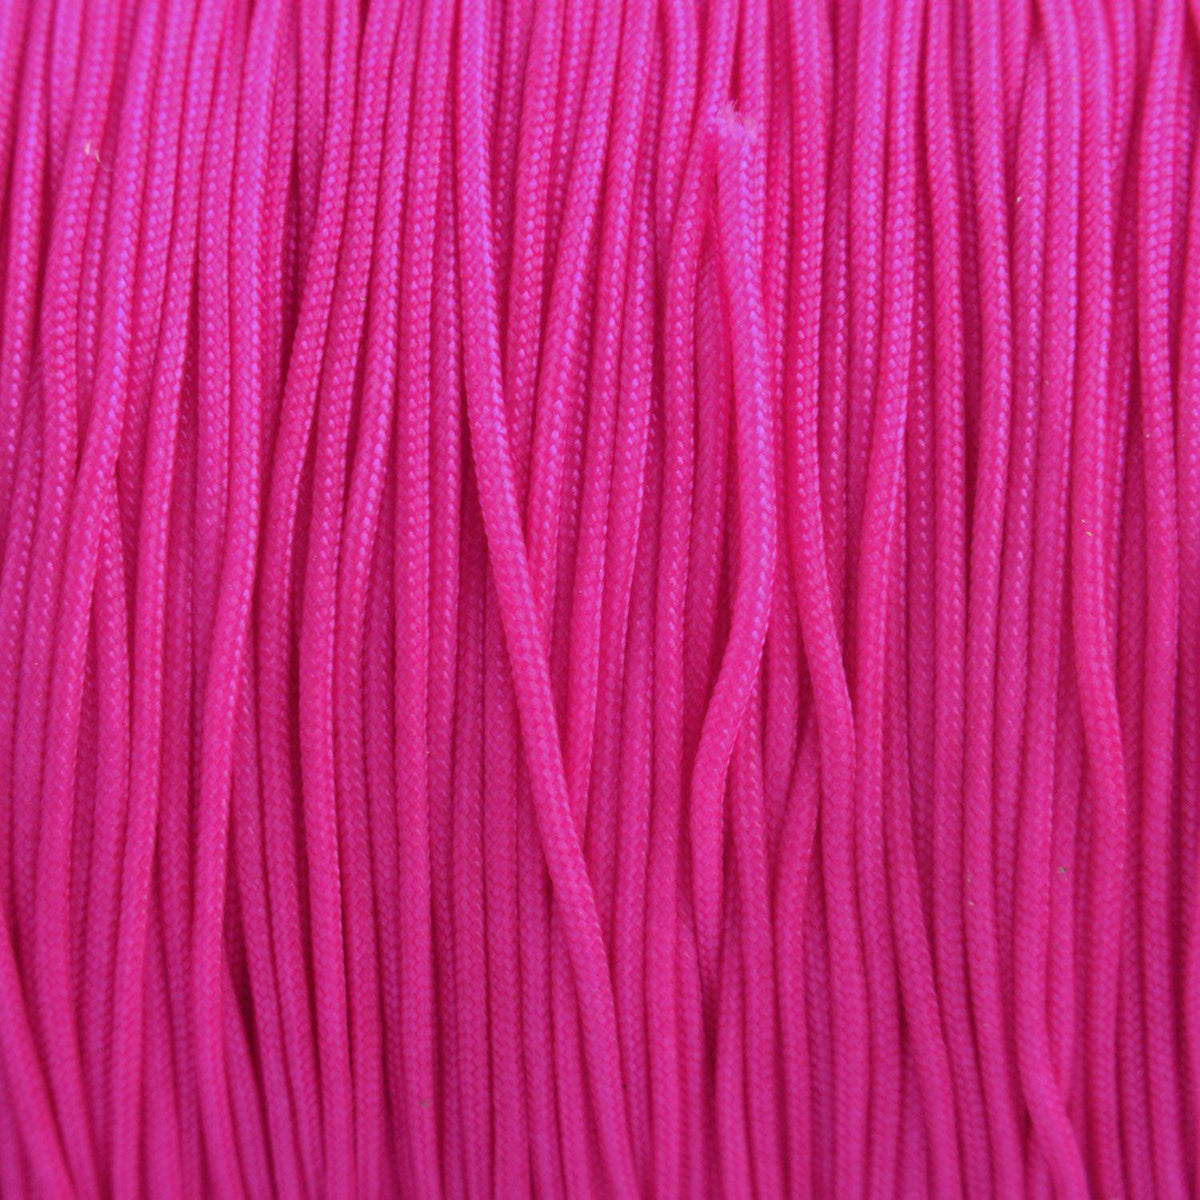 Nylon rattail koord fel fuchsia roze 0.8mm - 6 meter-Kraaltjes van Renate